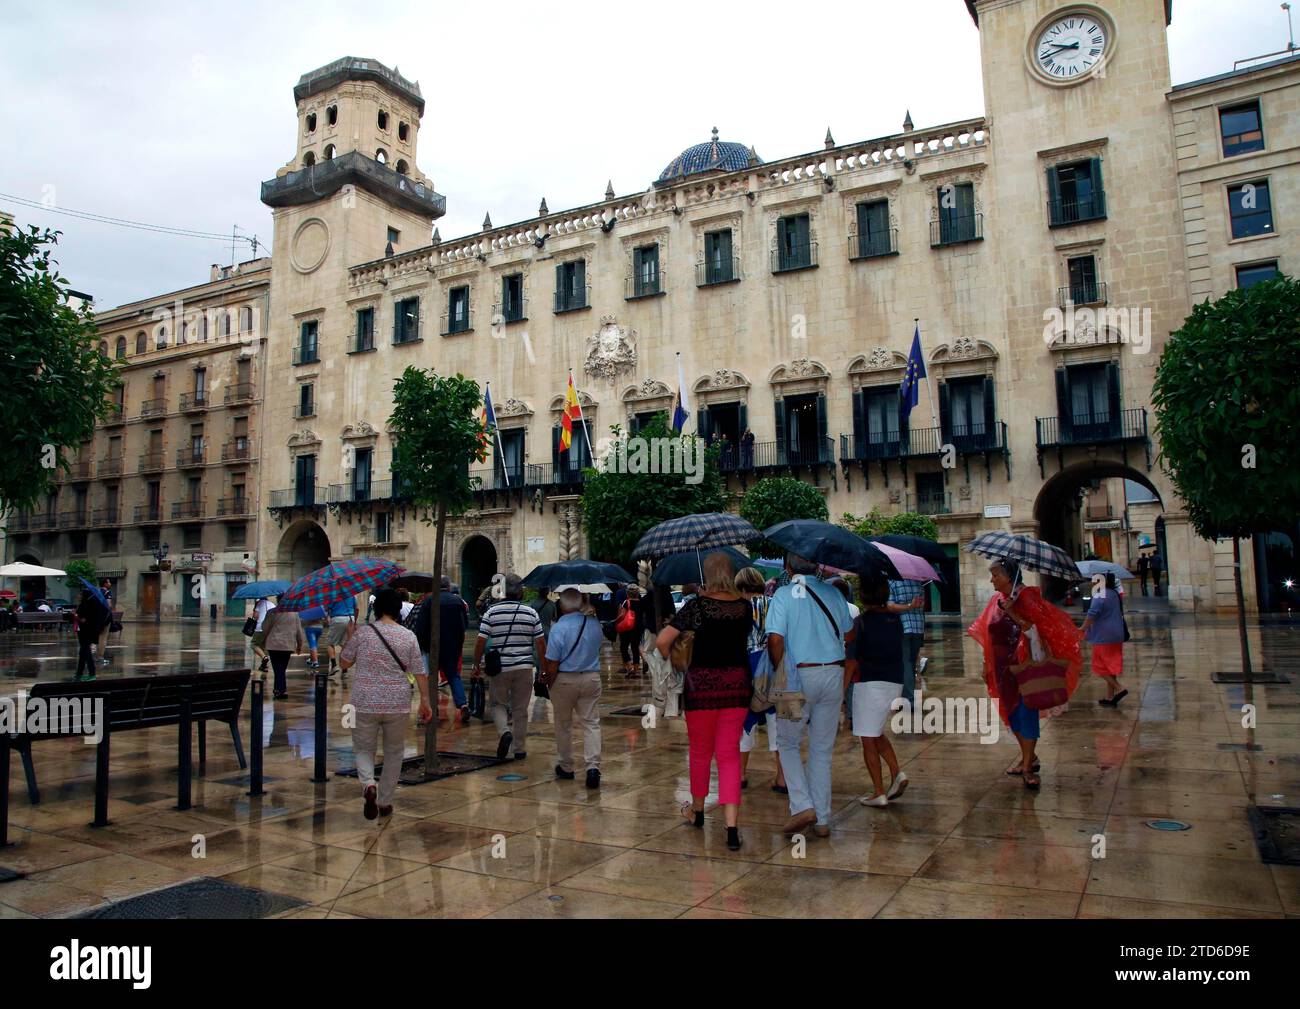 Alicante 09/22/2014 die ersten Regenfälle kommen in Alicante Foto: Juan Carlos Soler archdc. Quelle: Album / Archivo ABC / Juan Carlos Soler Stockfoto